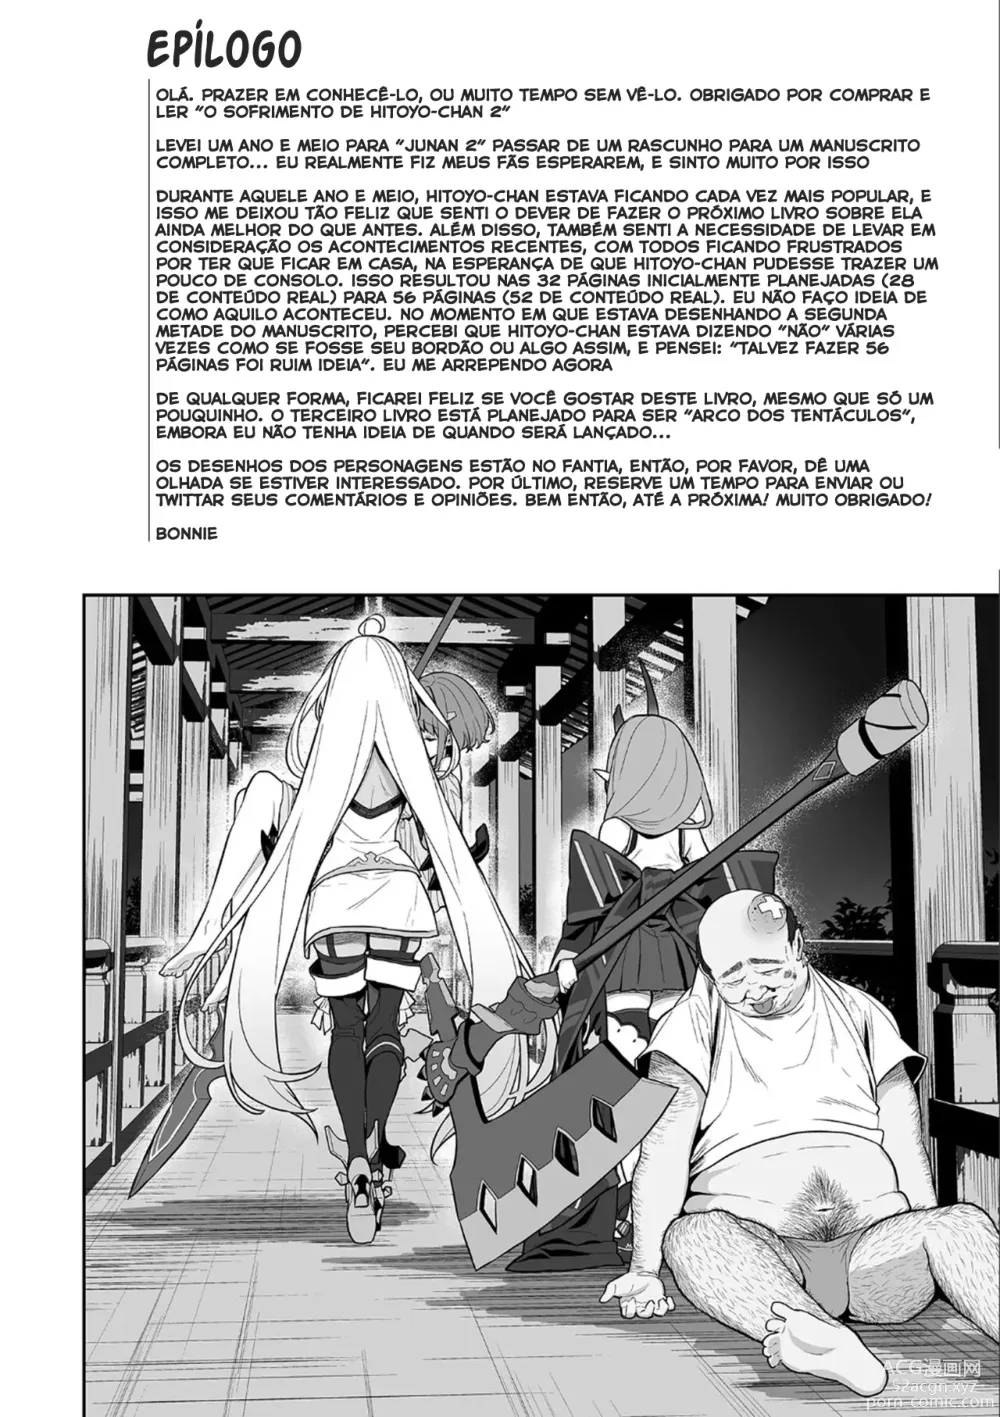 Page 52 of doujinshi O Sofrimento de Hitoyo-chan 2